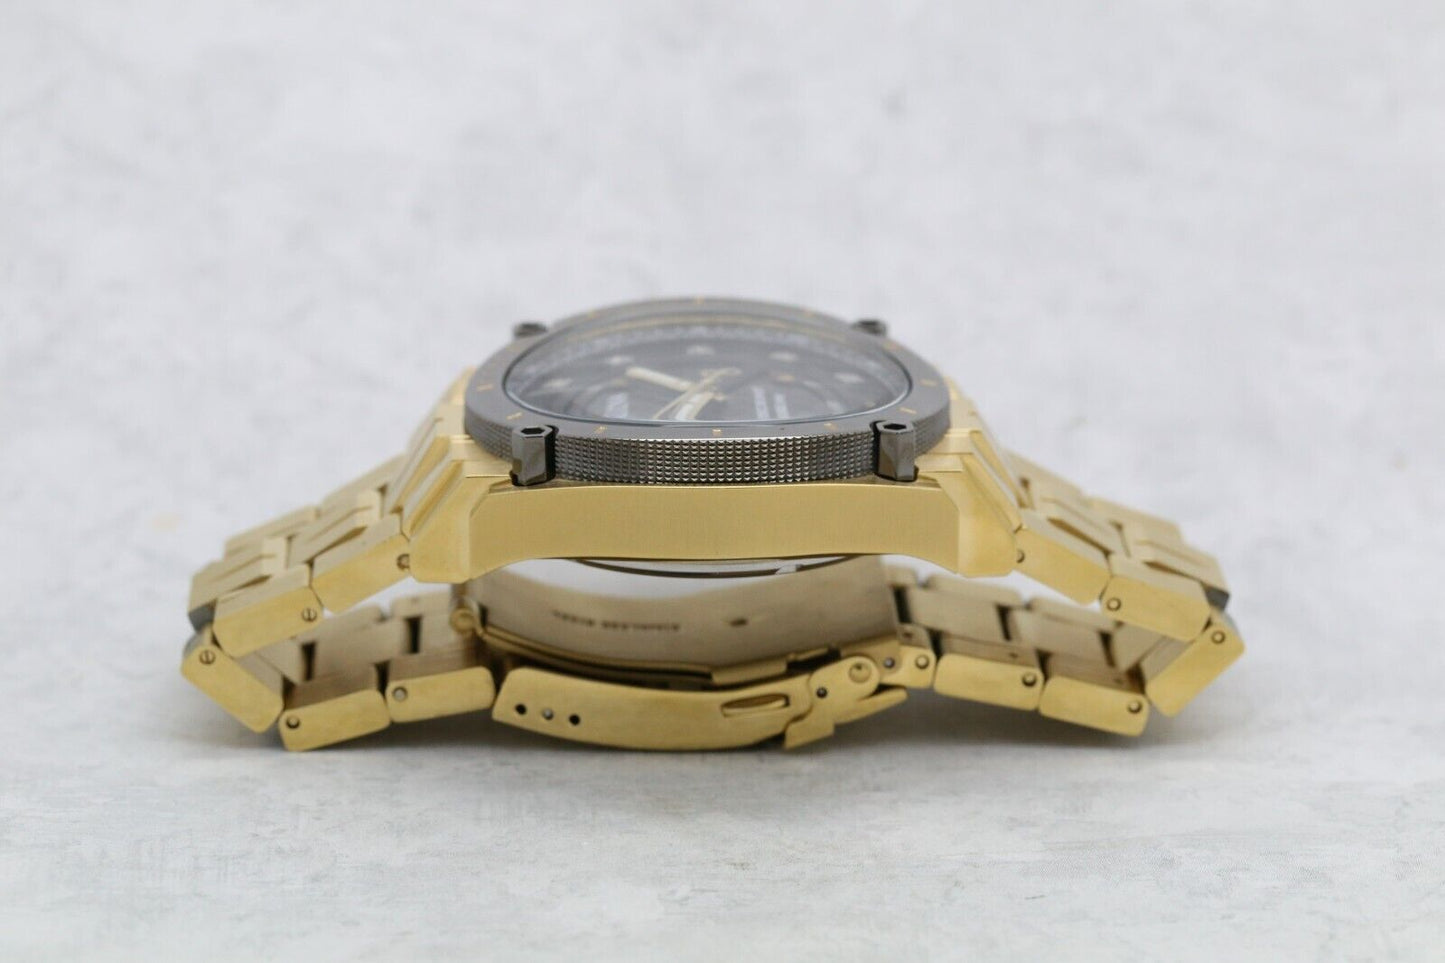 Bulova Precisionist Men's 98D156 Diamond Accent Gold Tone Stainless Steel Watch